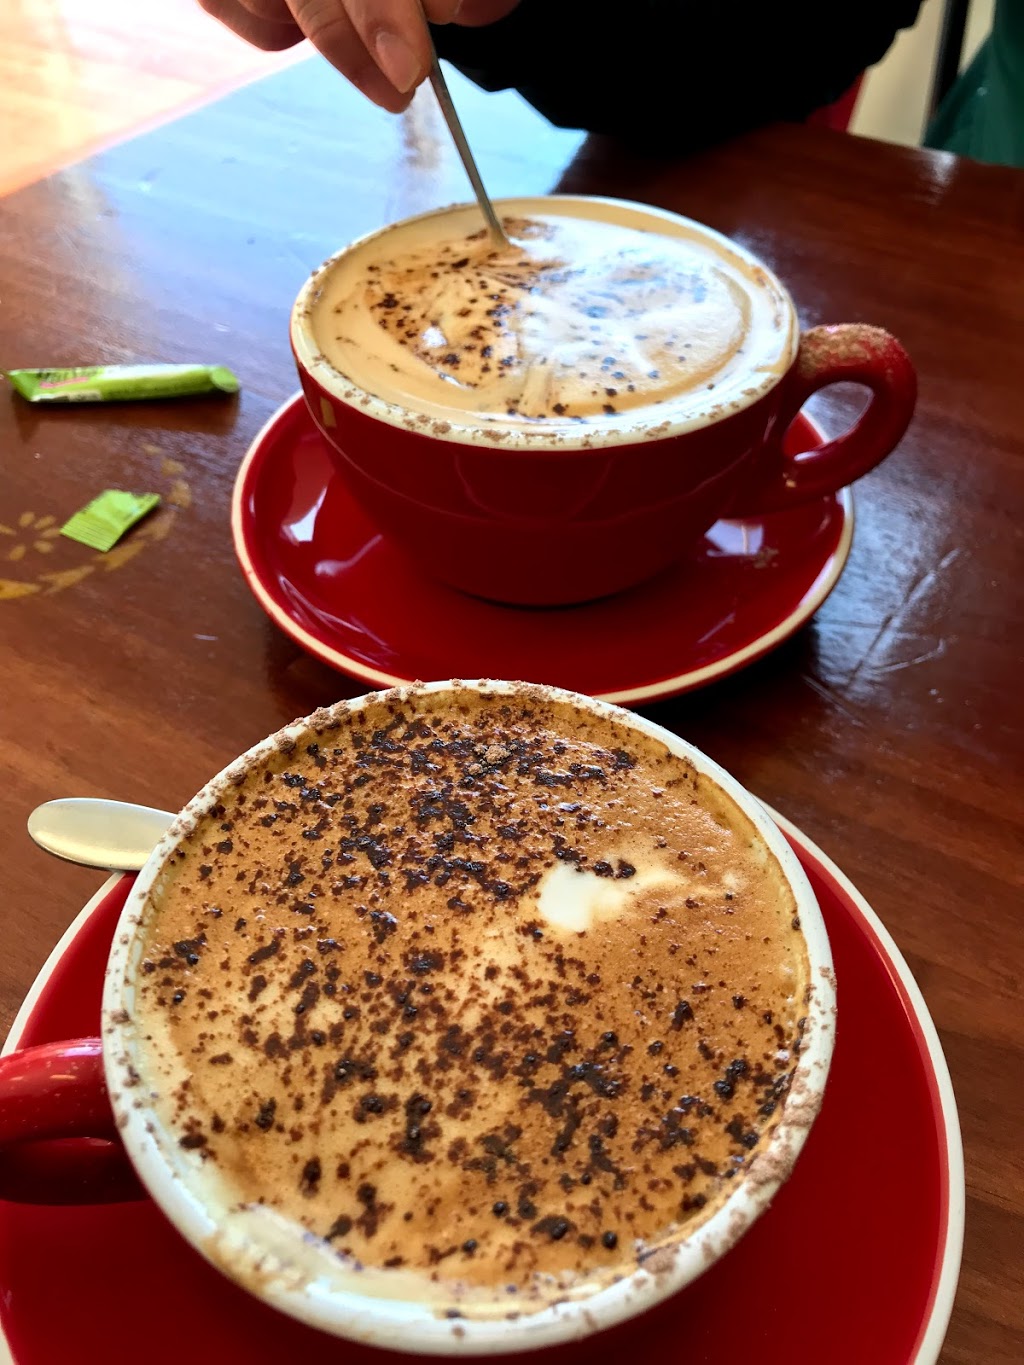 Fernz Cafe | cafe | 144 Queen St, St Marys NSW 2760, Australia | 0298338072 OR +61 2 9833 8072